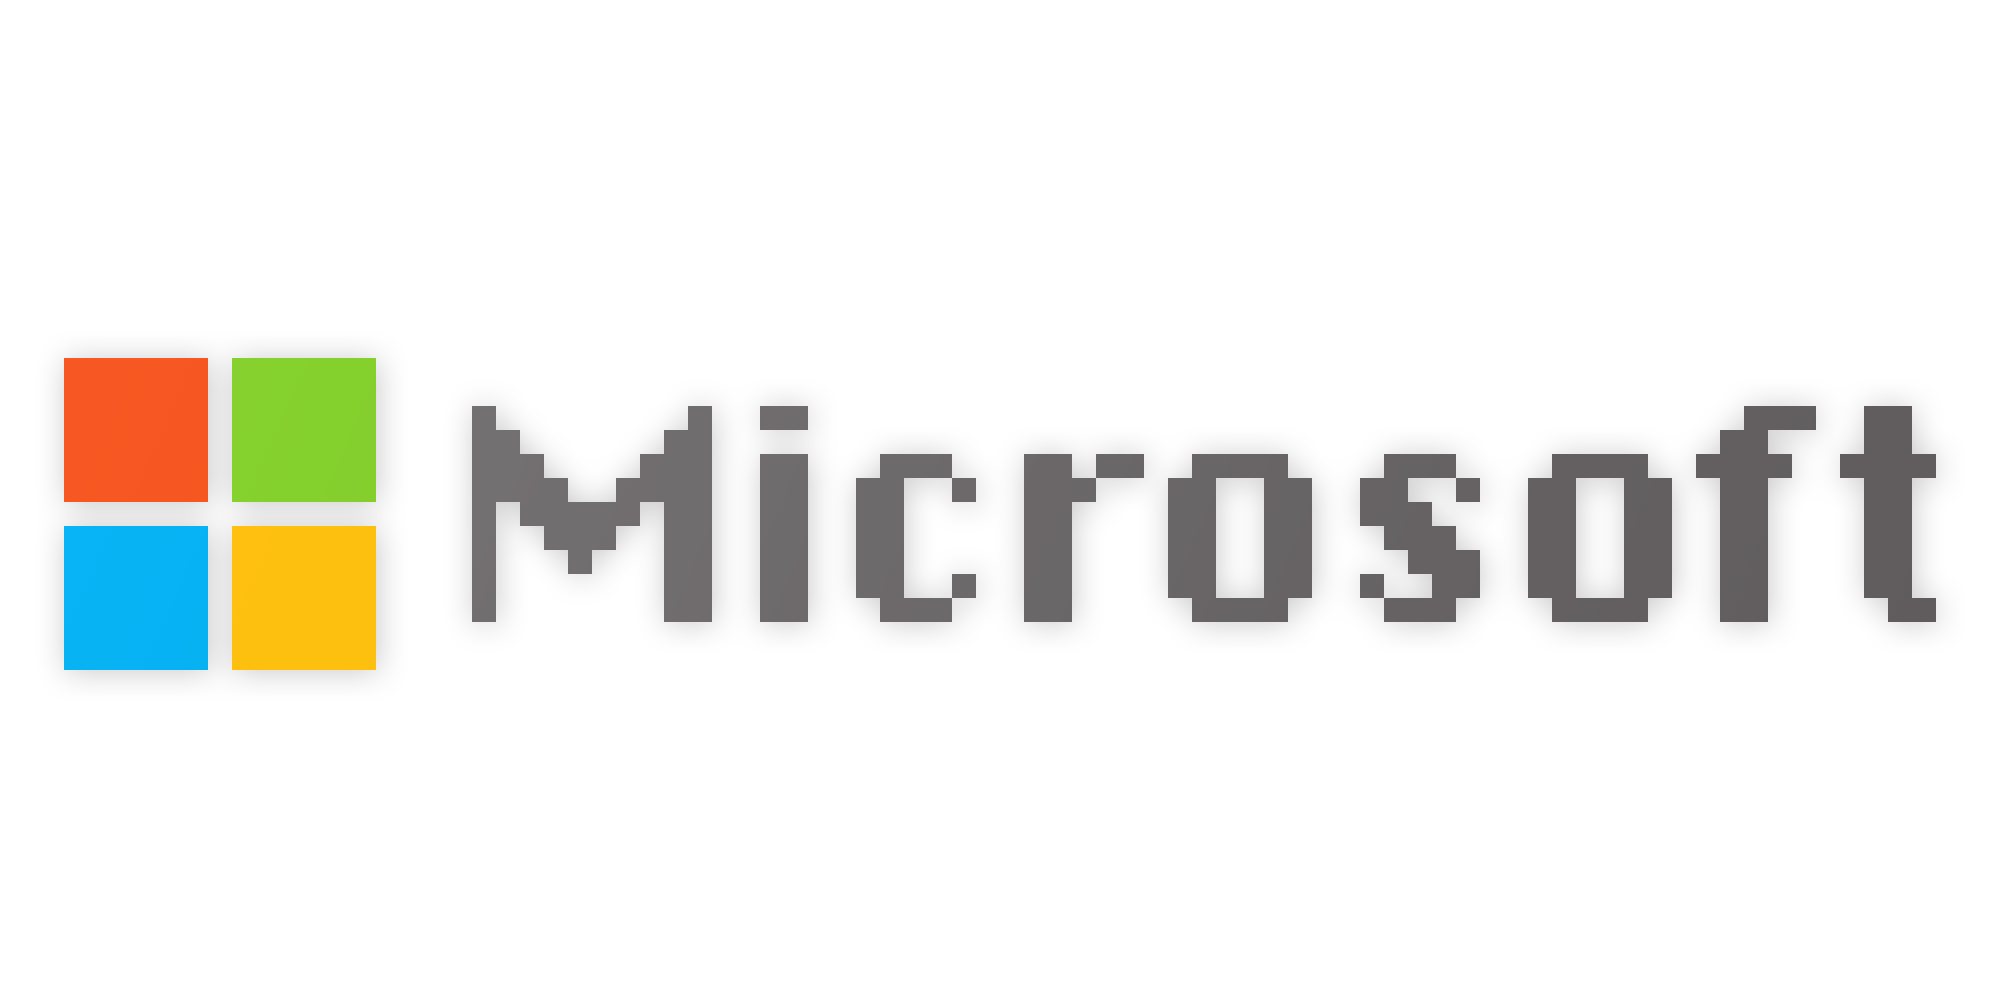 Microsoft Logo Font Style